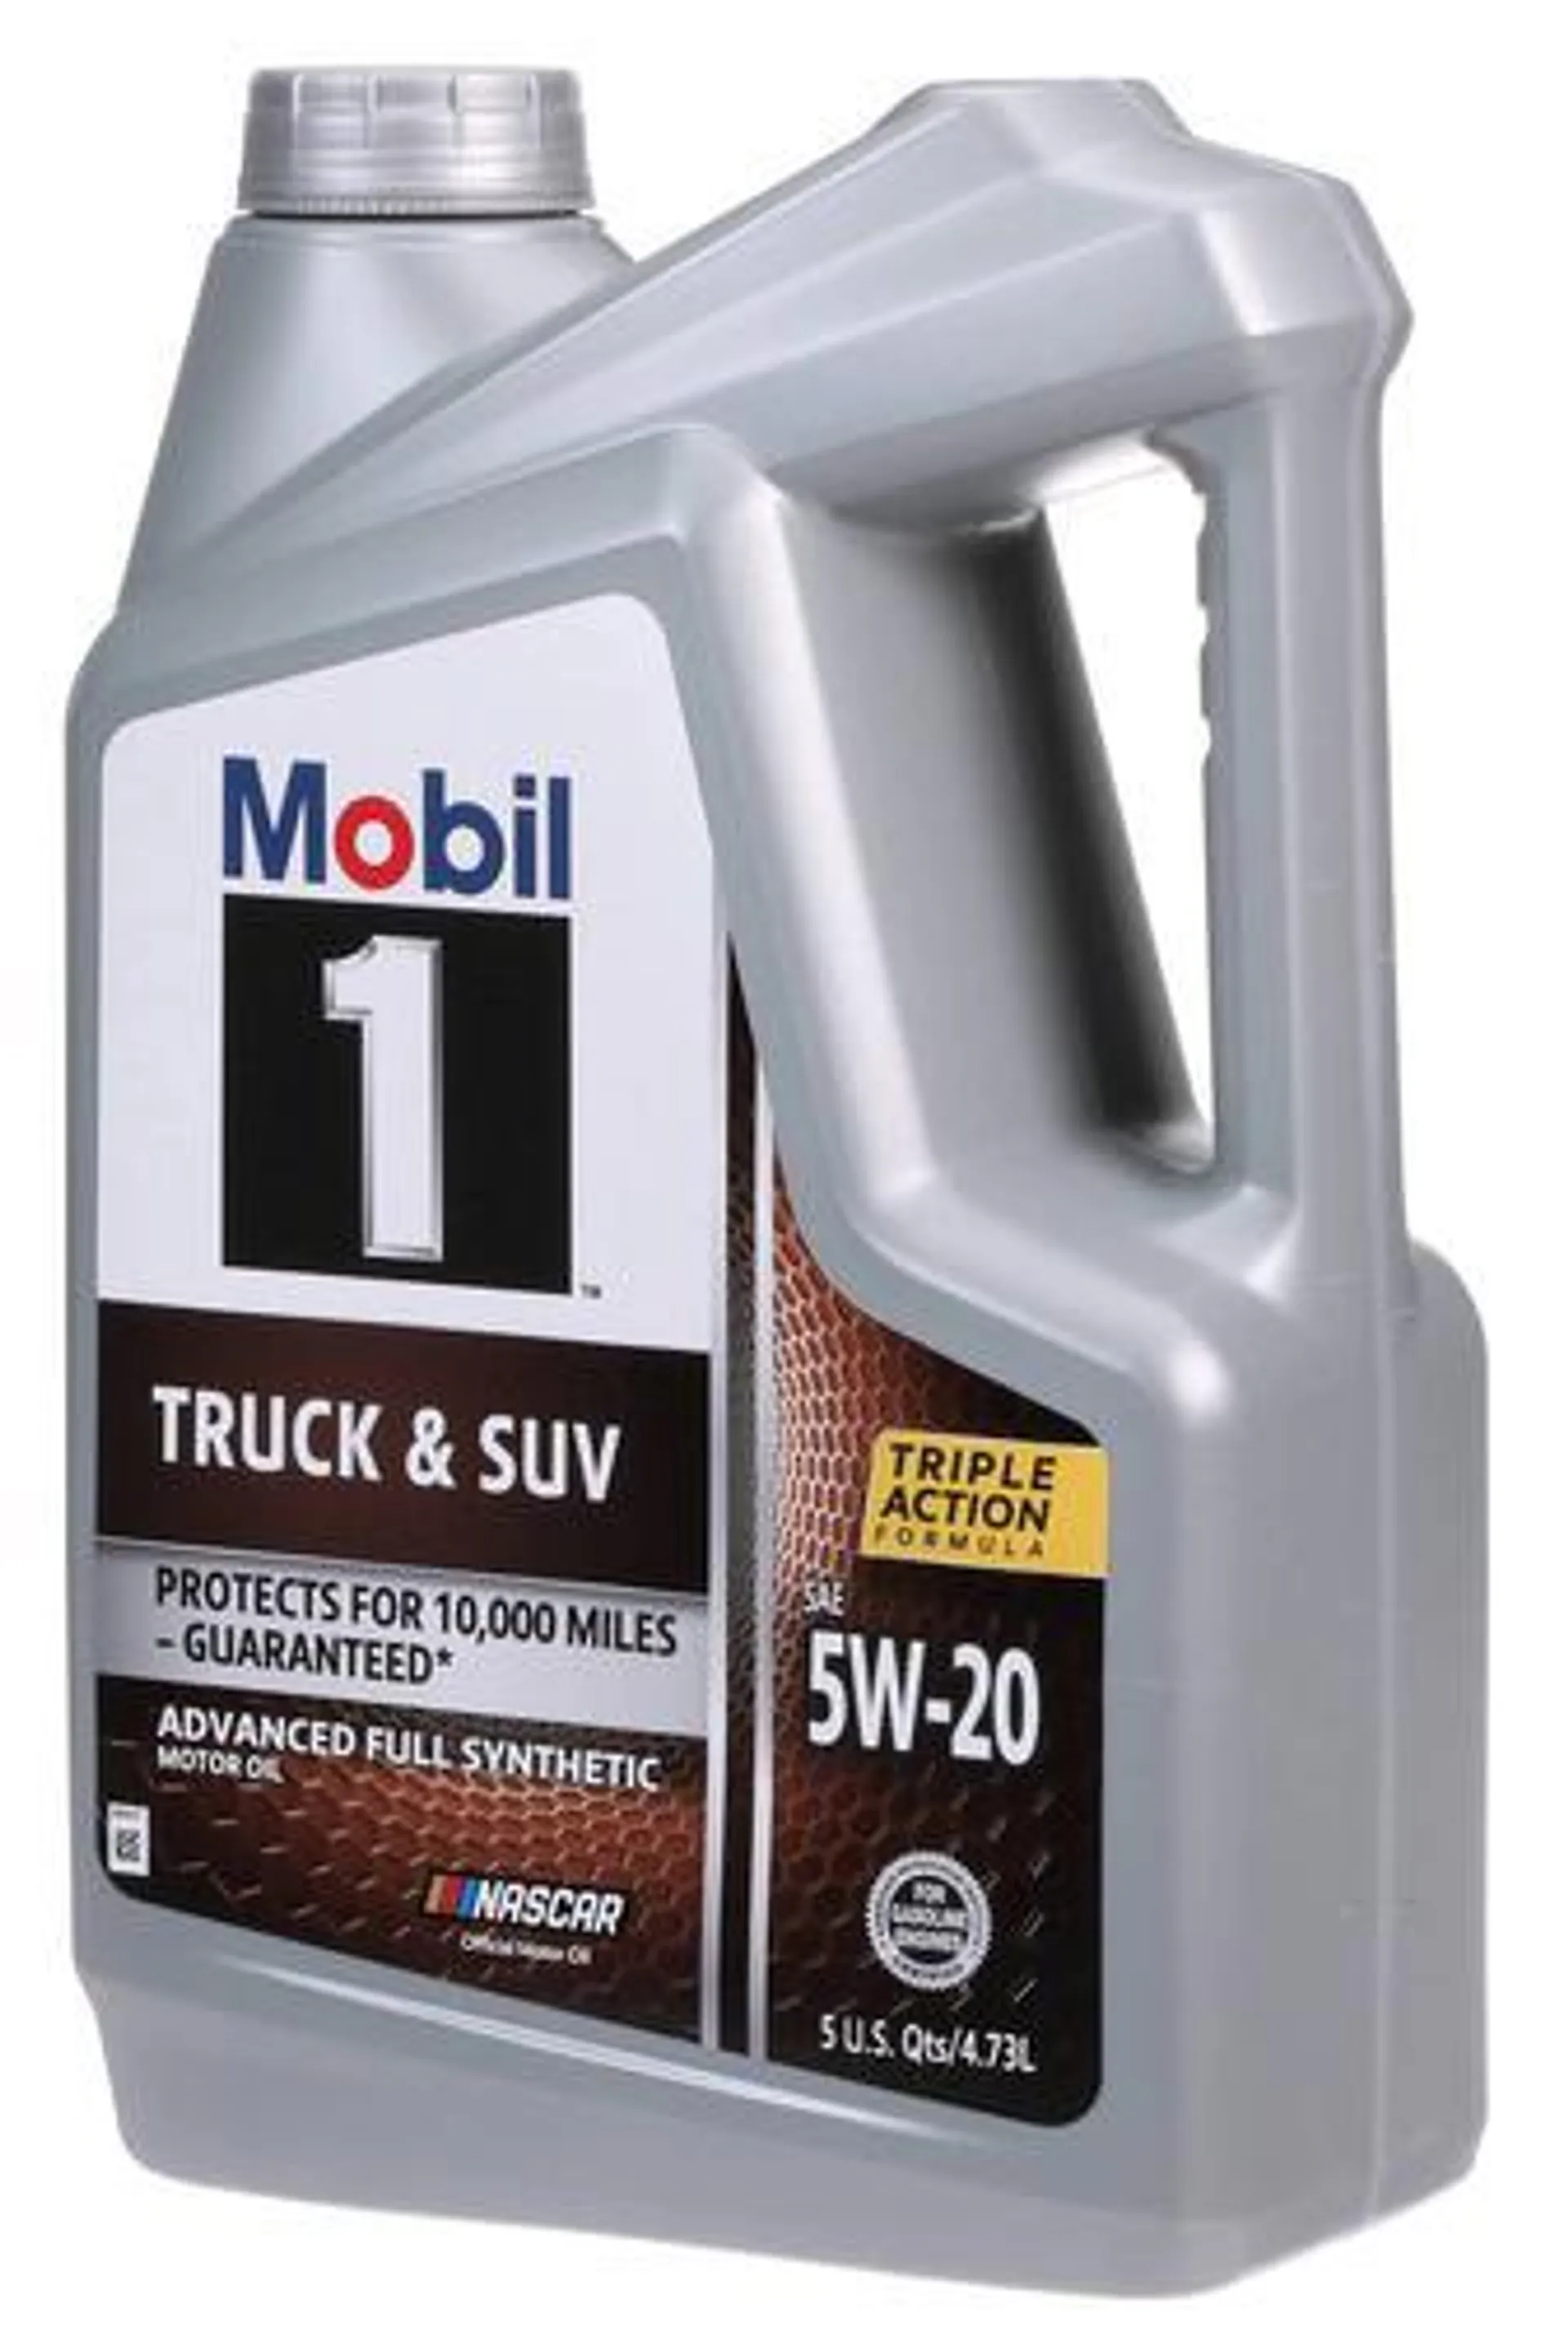 Mobil 1 Truck & SUV Full Synthetic Full Synthetic Motor Oil 5W-20 5 Quart - 1-5-20SUV-5QT